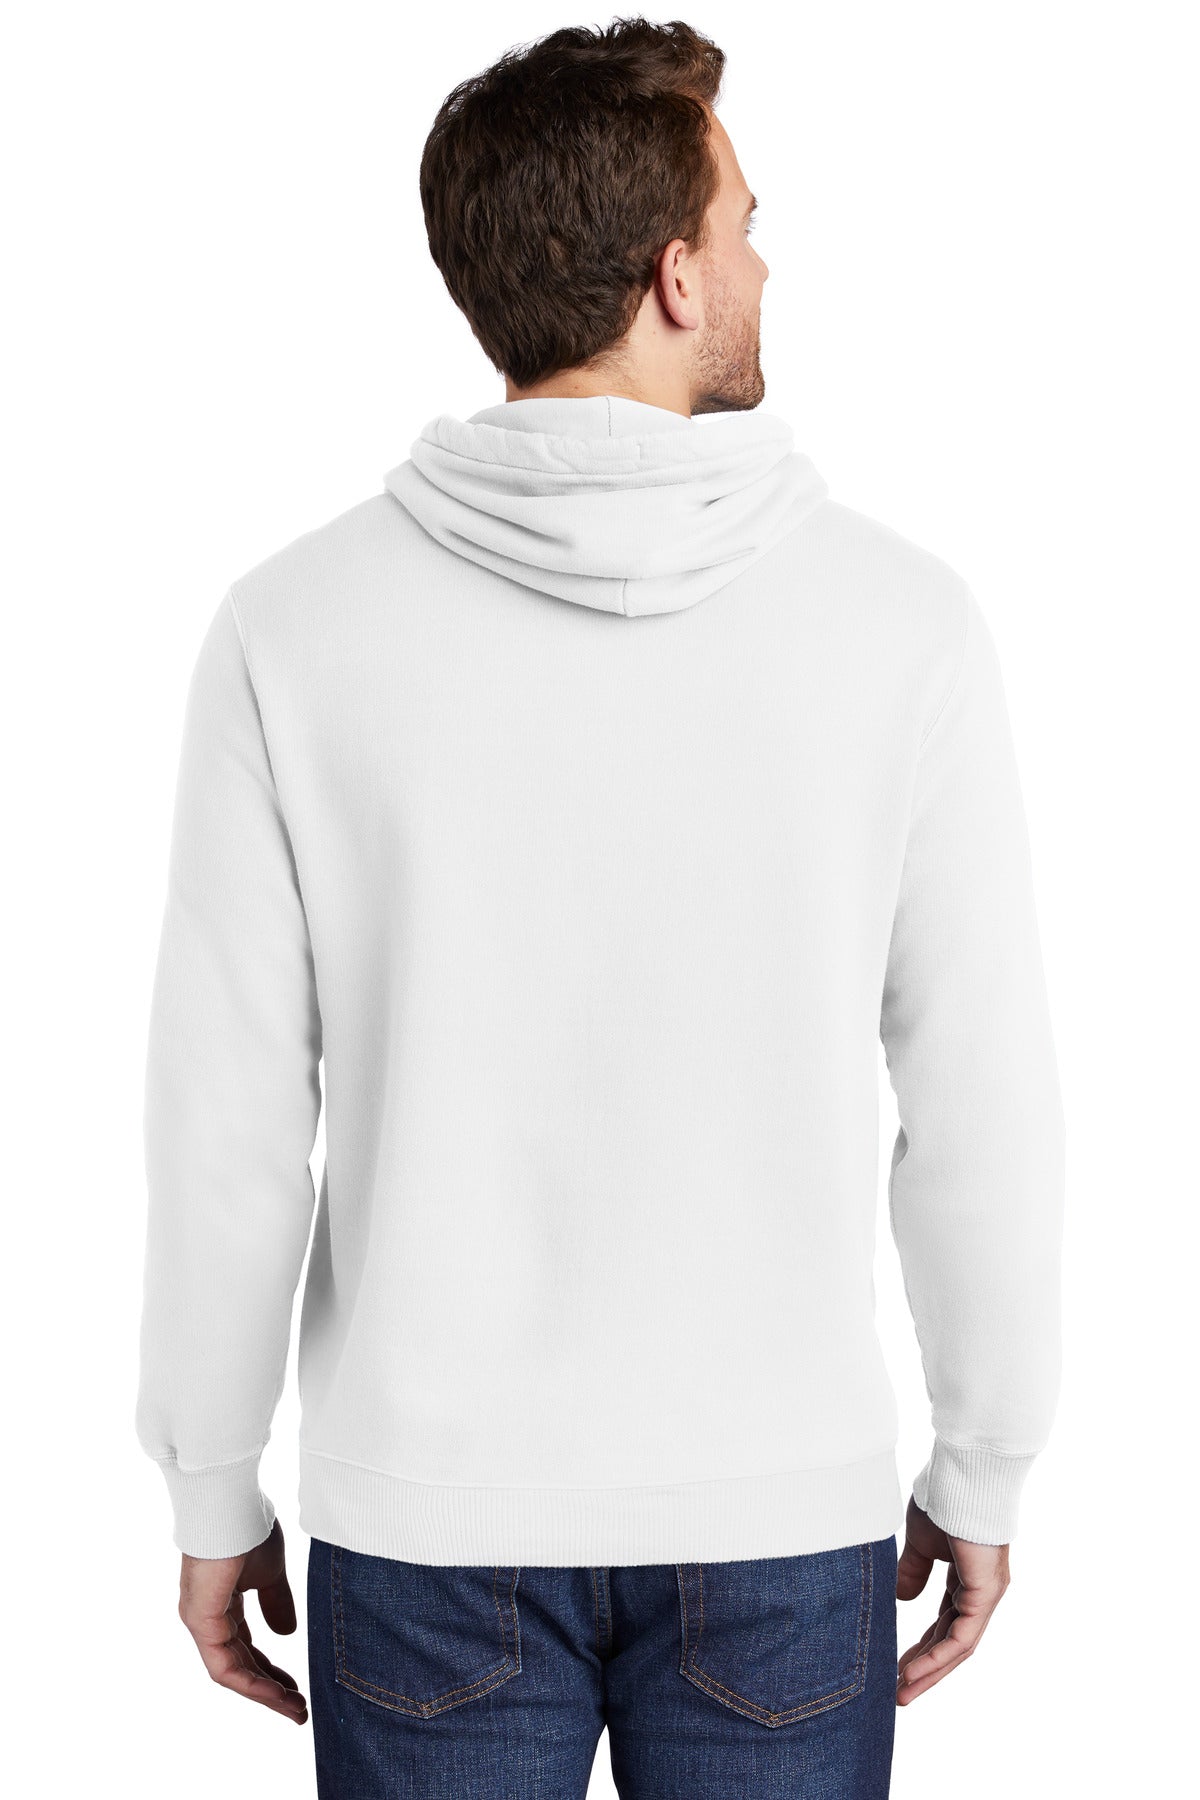 Port & Company Beach Wash Garment-Dyed Pullover Hooded Sweatshirt. PC098H